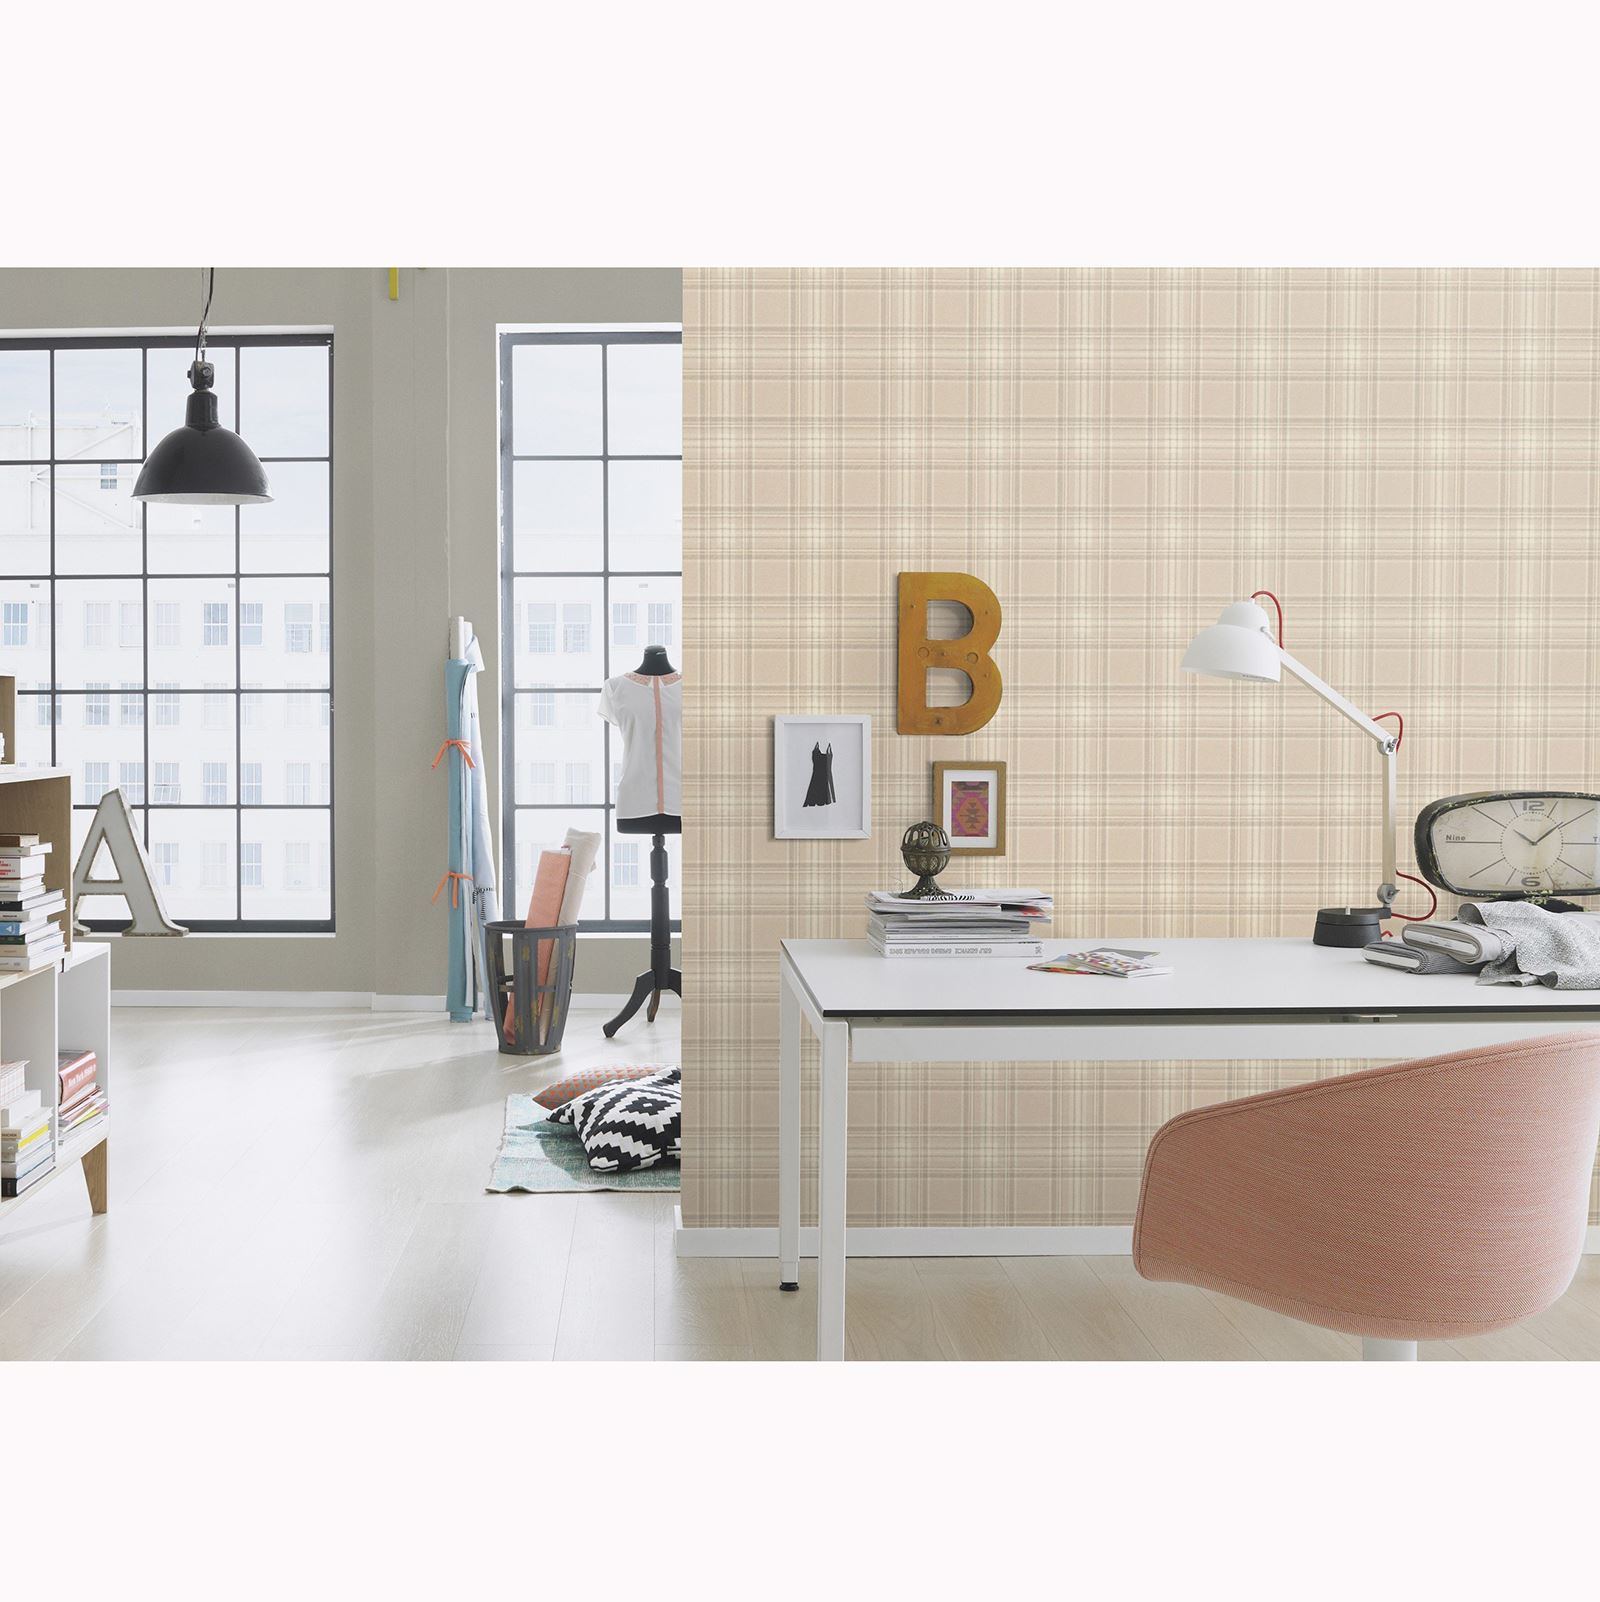 tottenham wallpaper for bedrooms,furniture,room,tile,product,interior design